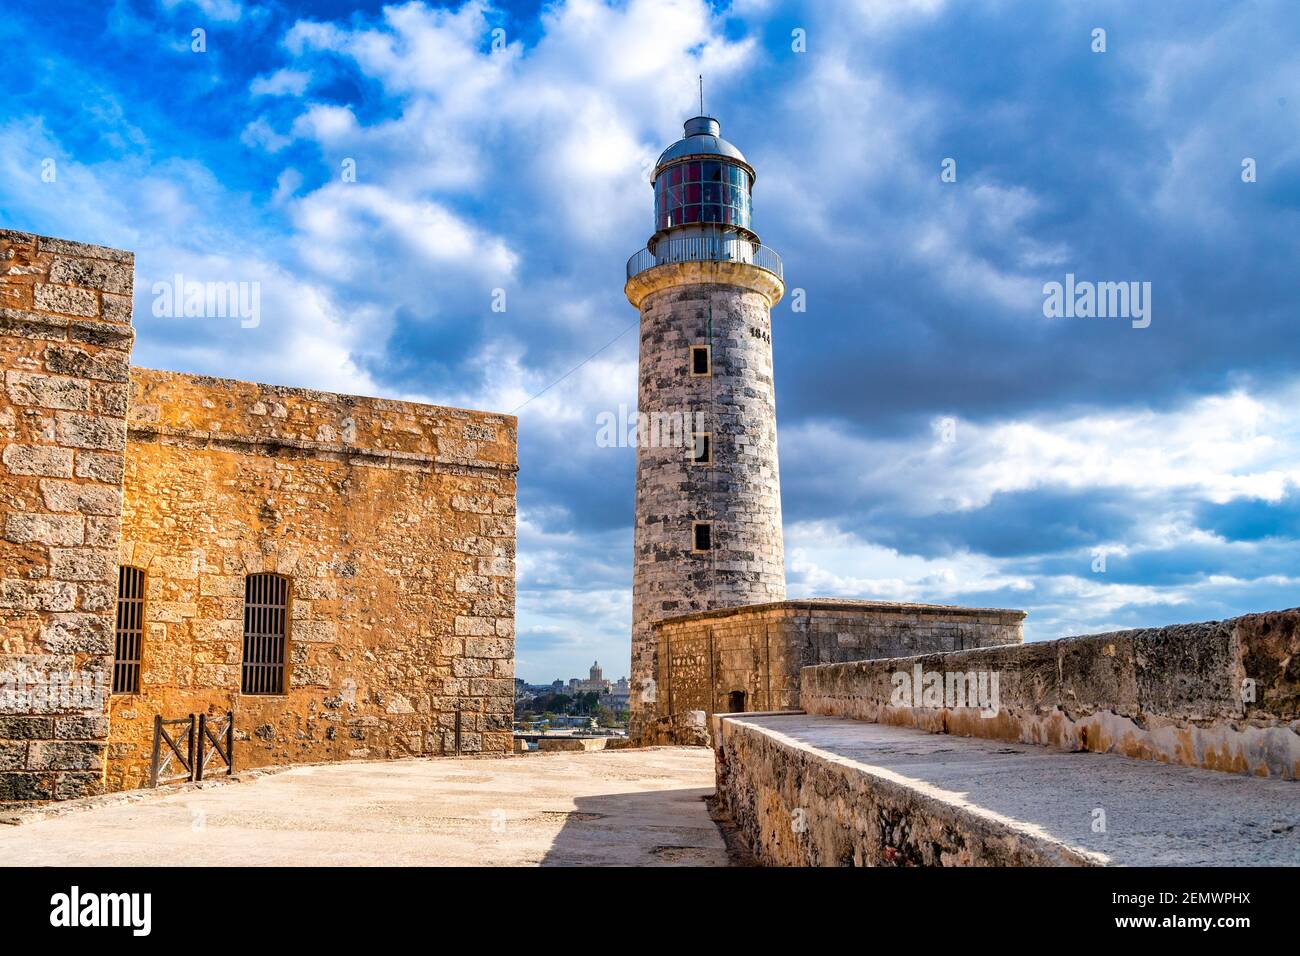 El morro castle havana harbor hi-res stock photography and images - Alamy